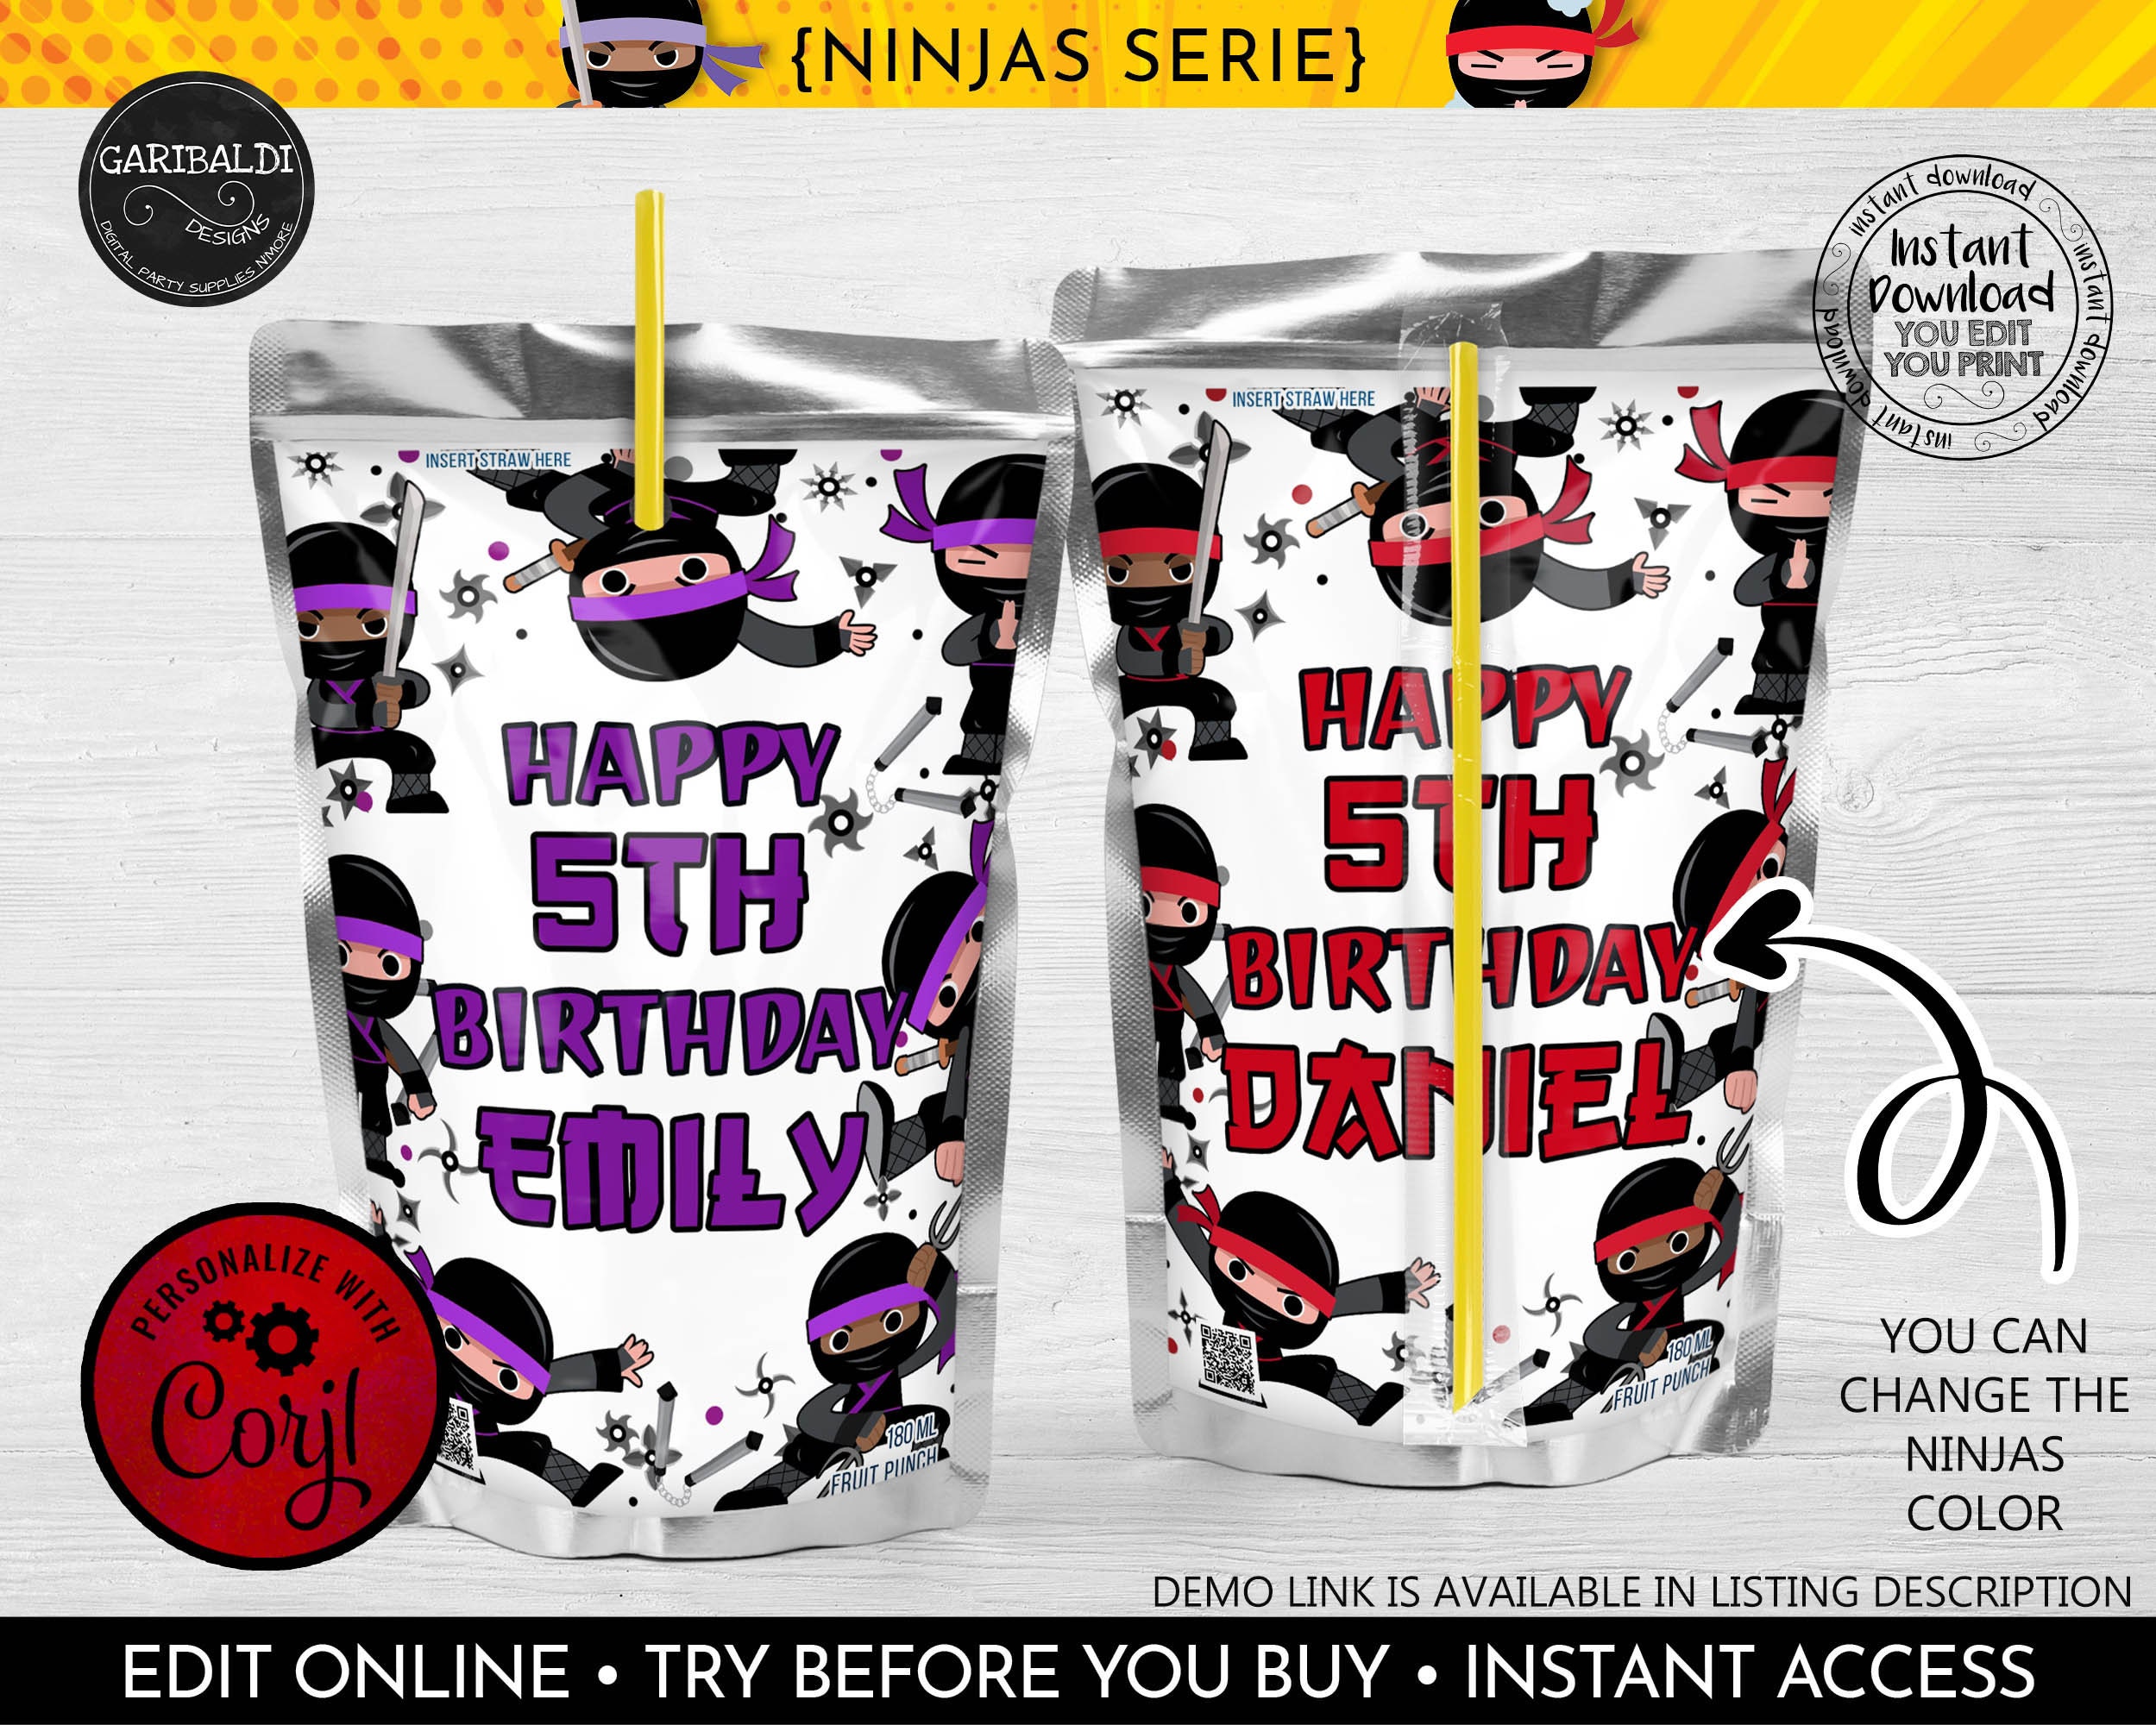 Ninja Juice Pouch Labels Editable Ninja Juice Box Label 